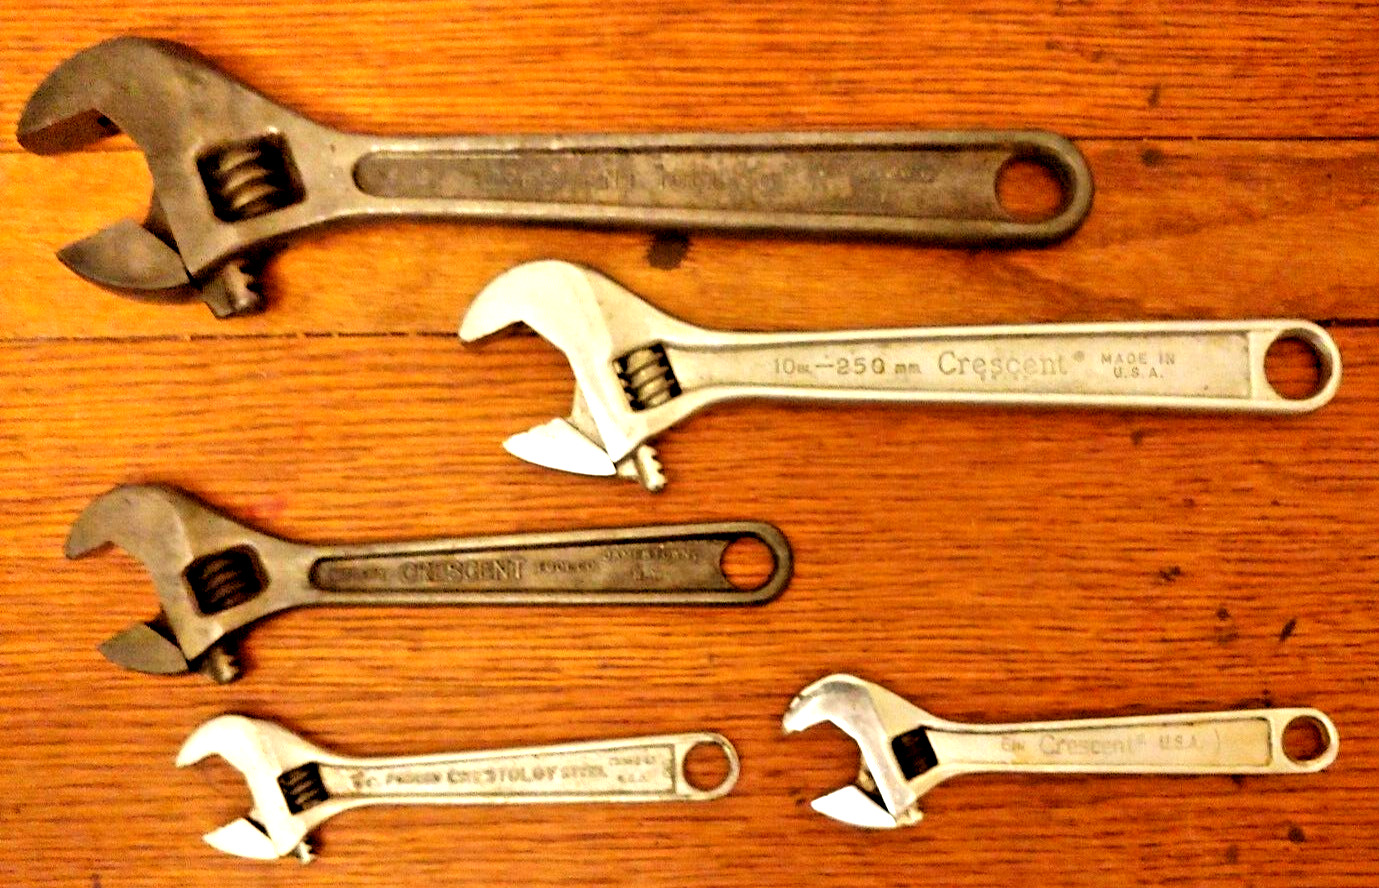 CRESCENT Crestoloy 5-Piece Adjustable Wrench Set - 12 10 8 6 & 6